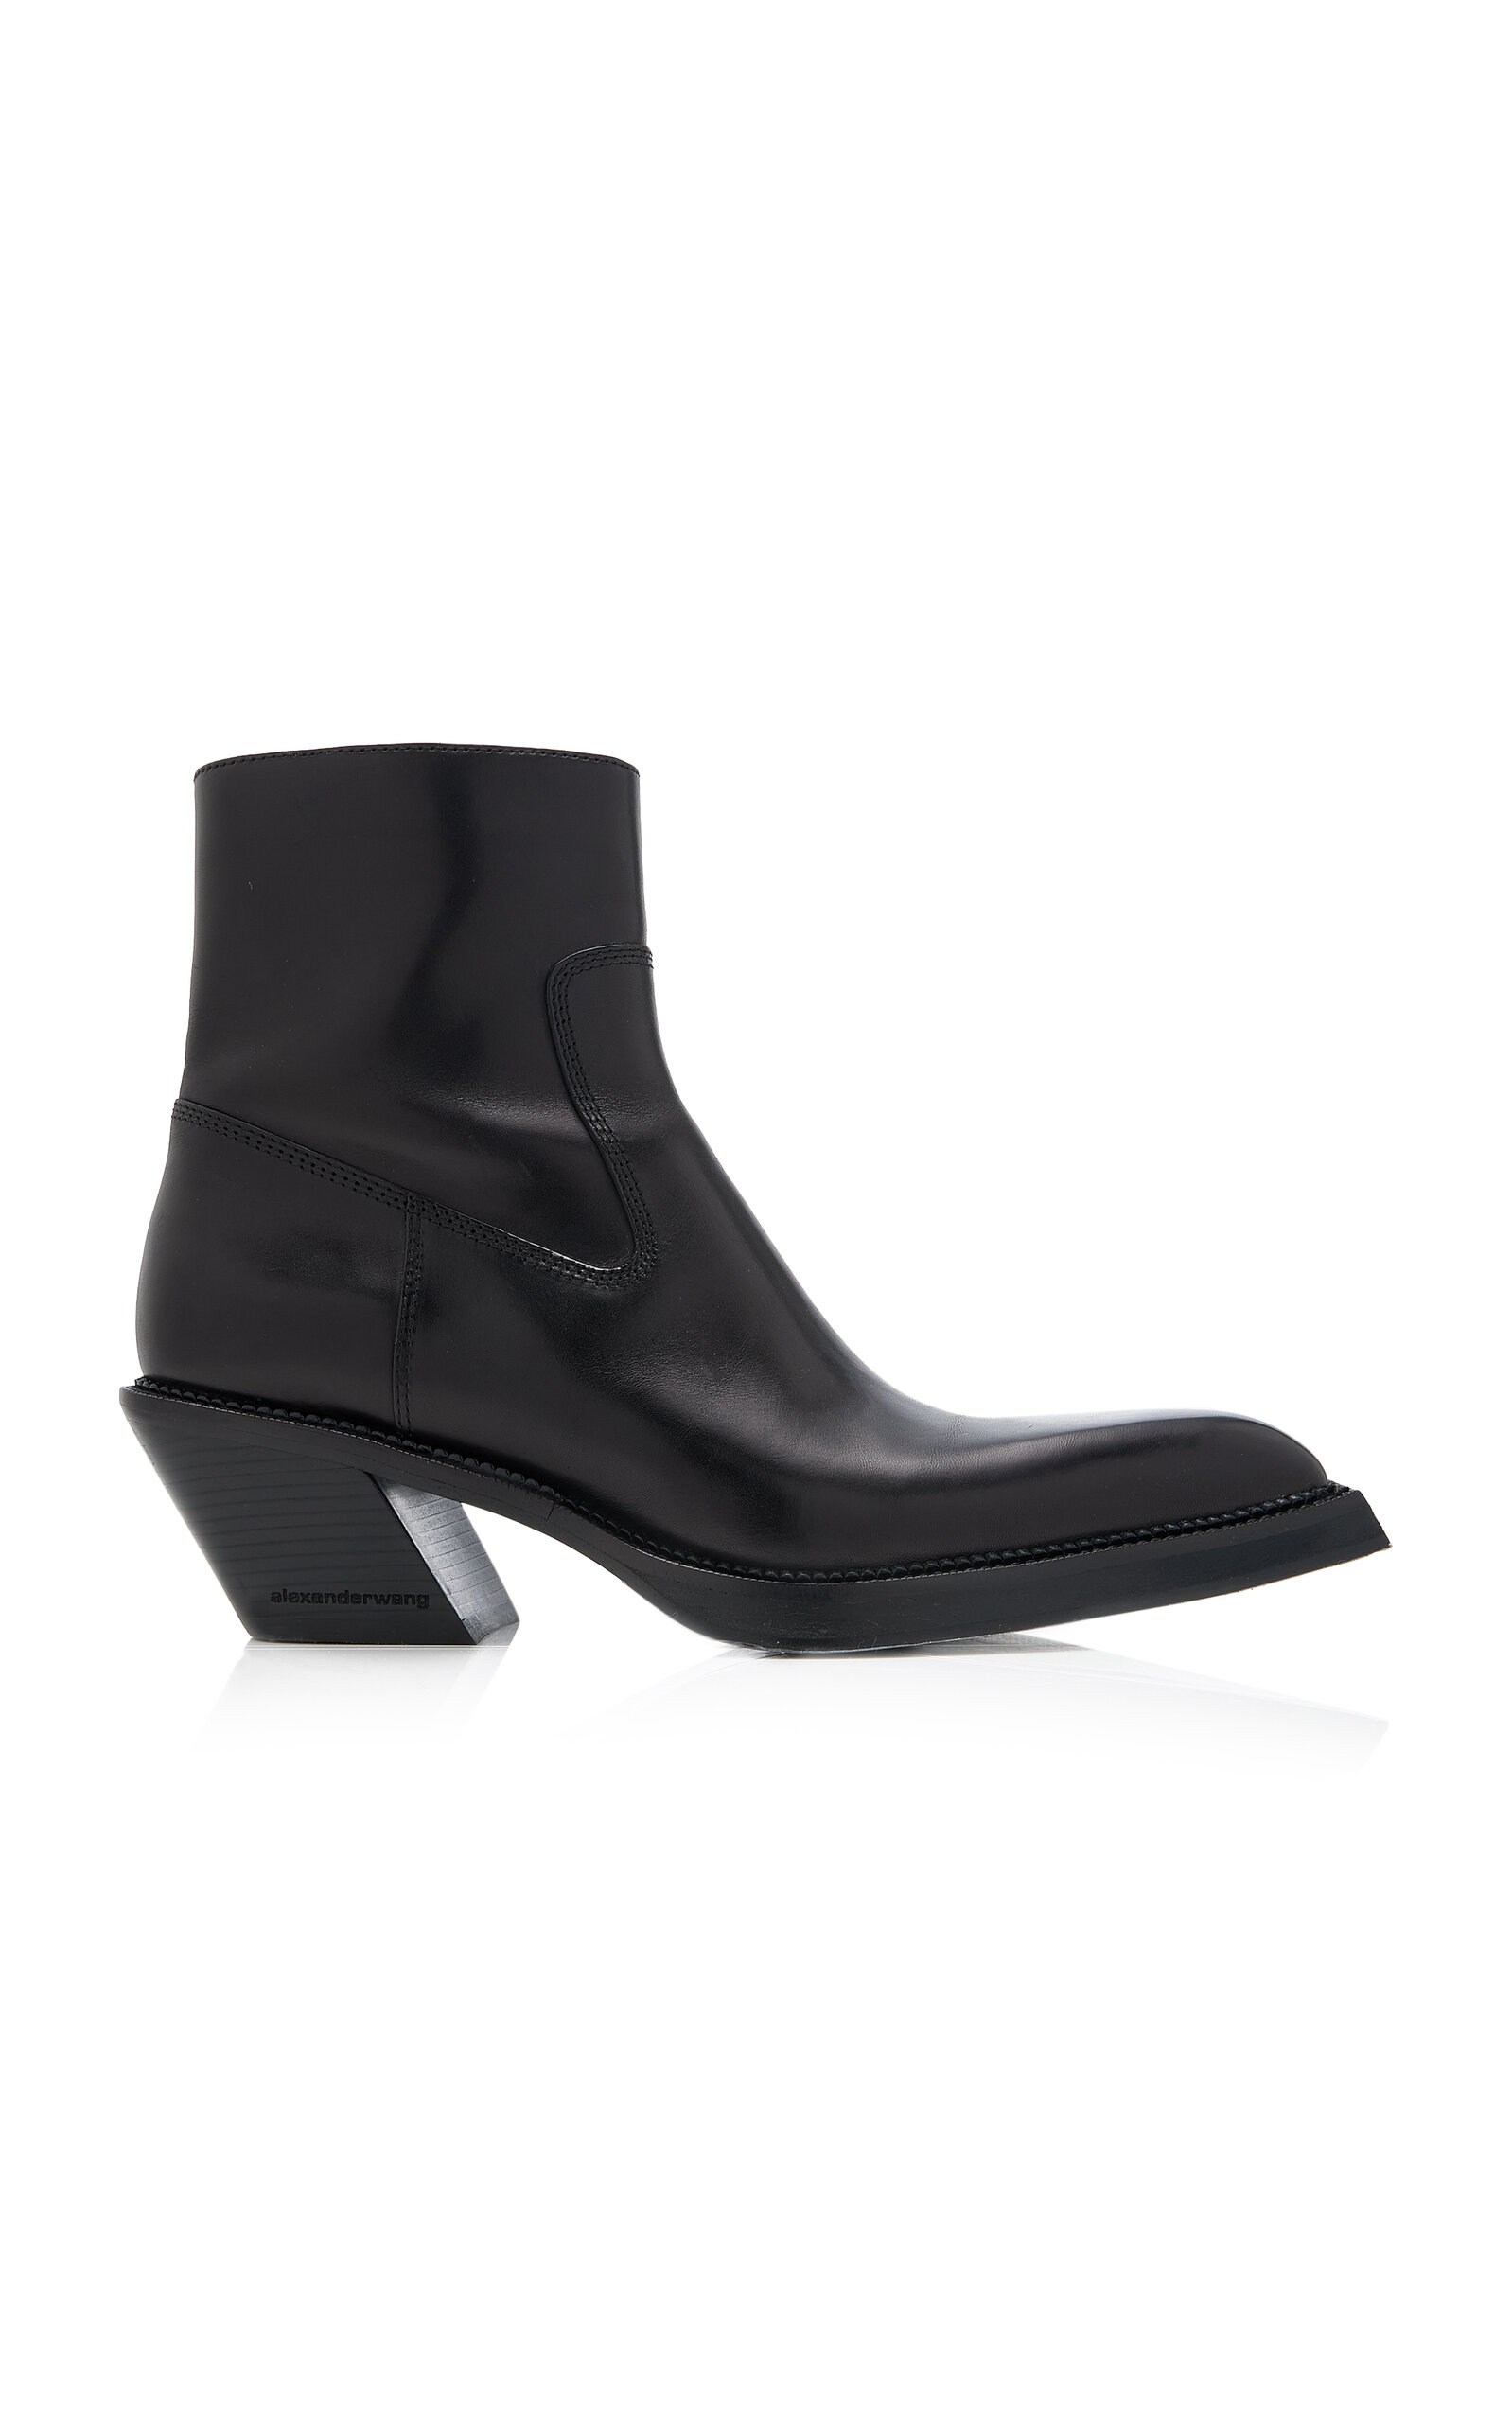 Alexander Wang - Women's Donovan Leather Ankle Boots - Black - Moda Operandi